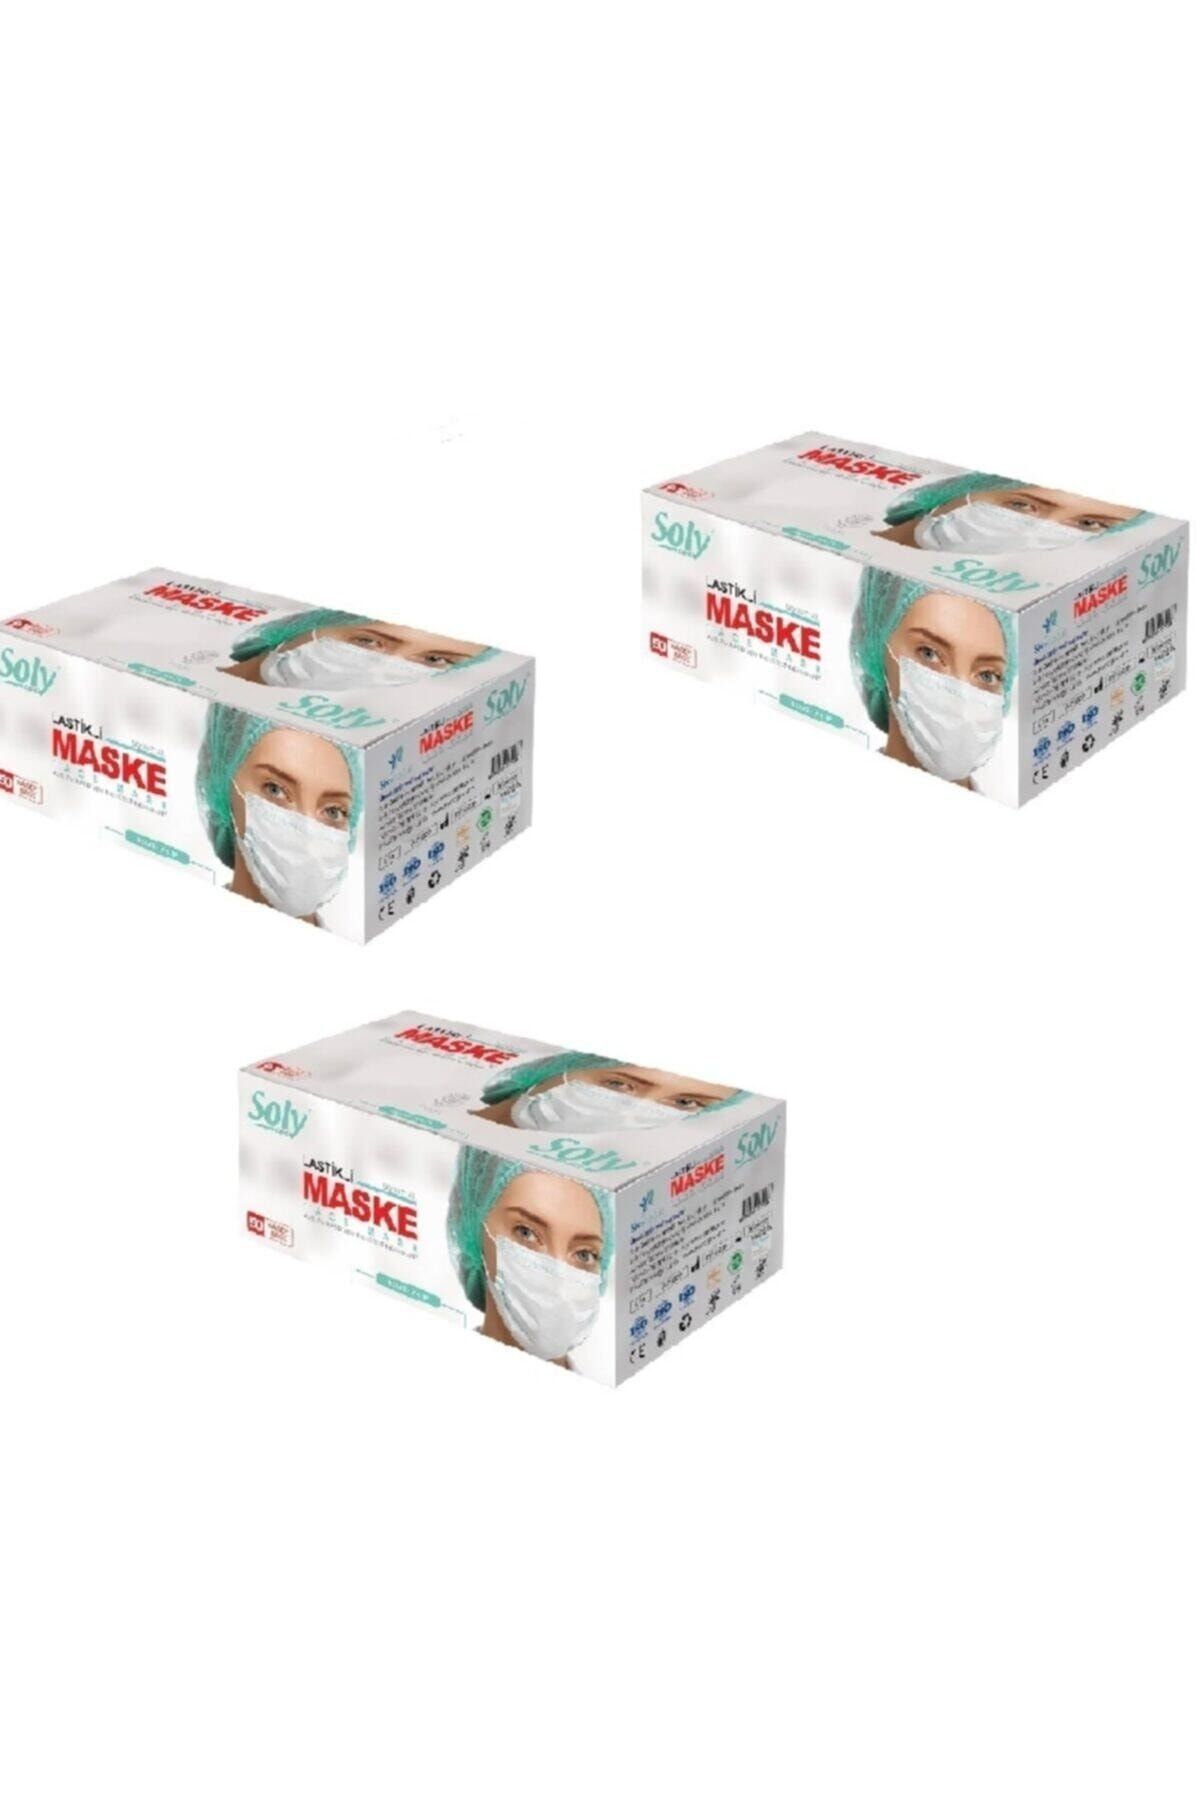 Soly "Beyaz Meltblown'lu" Care Cerrahi Maske 150 Adet (50'li 3 Kutu) Üç Katlı Lastikli Burun Telli